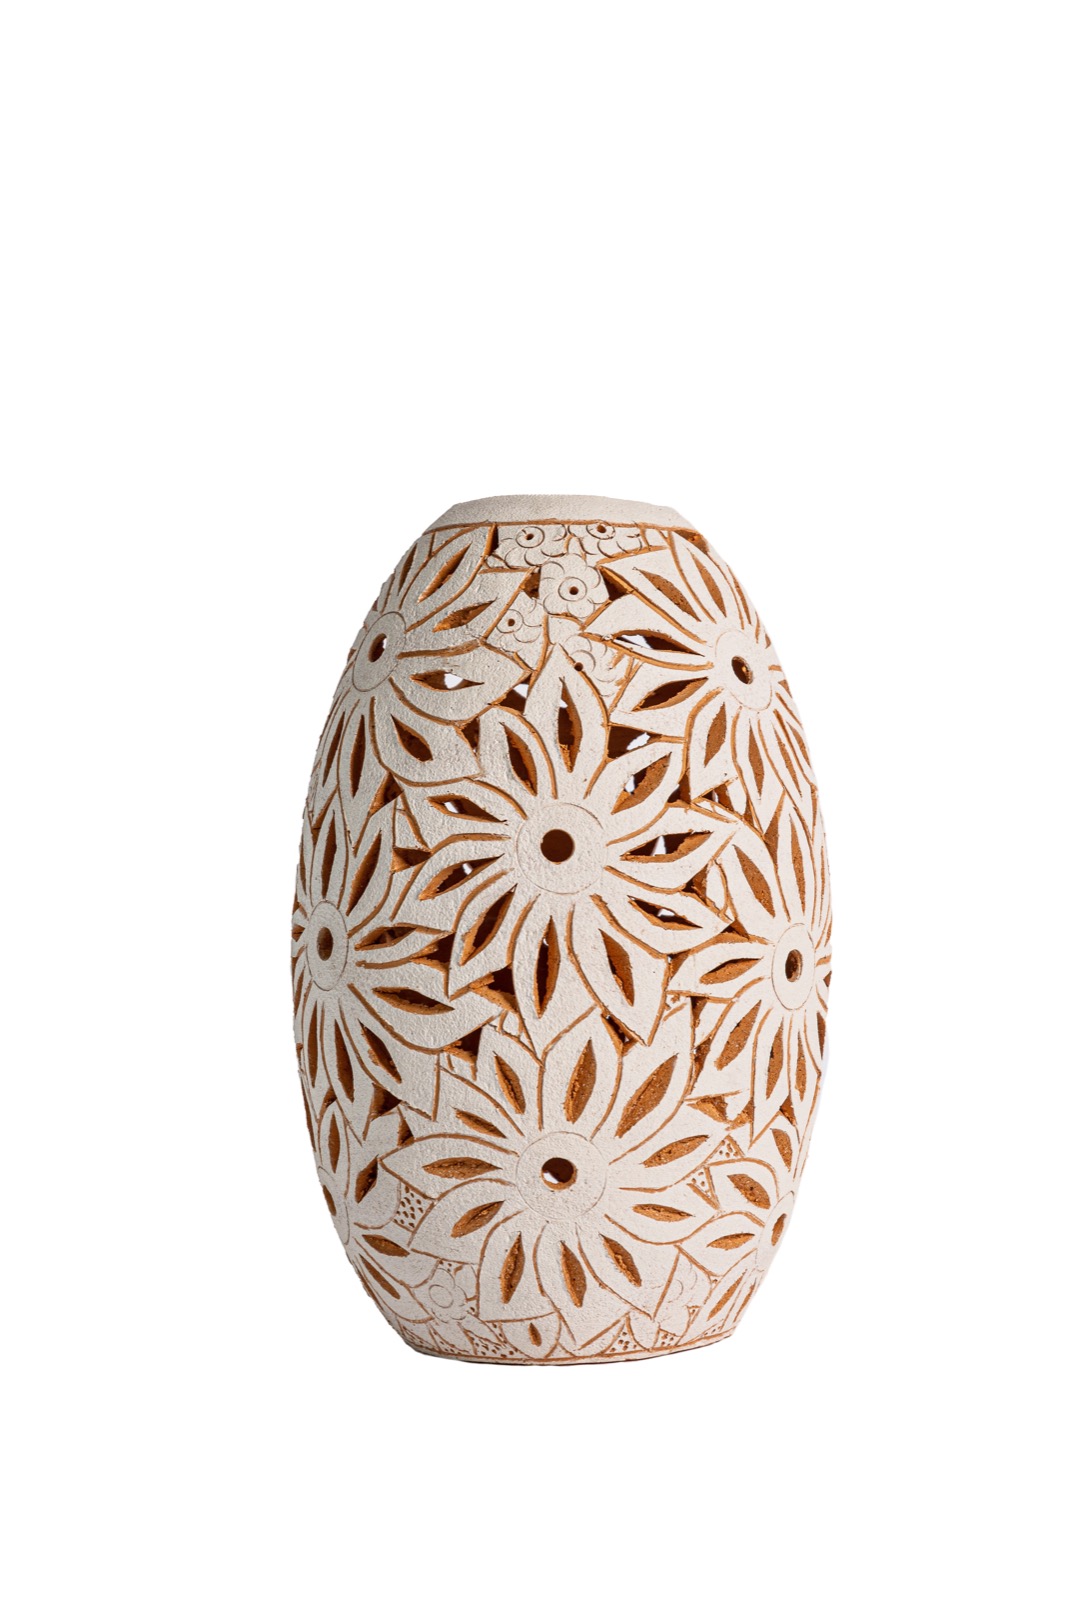 White clay vase